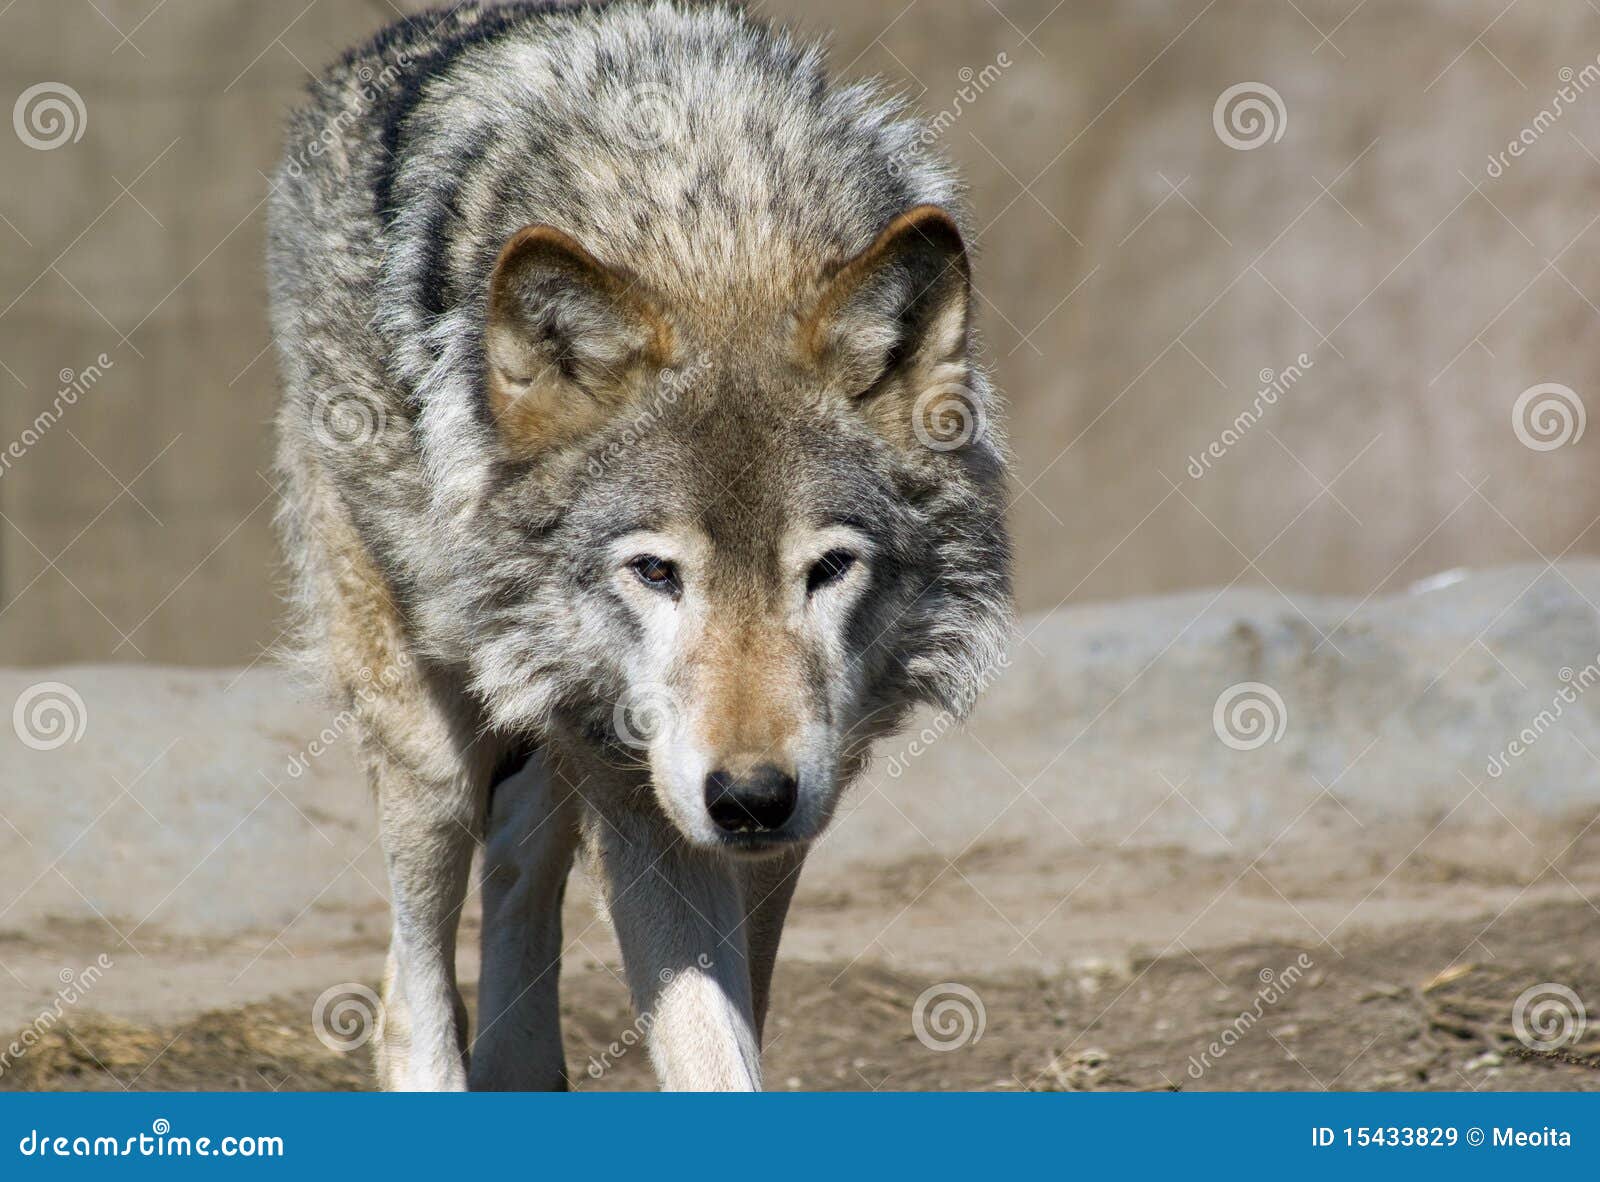 Wolf pics sad Top 25